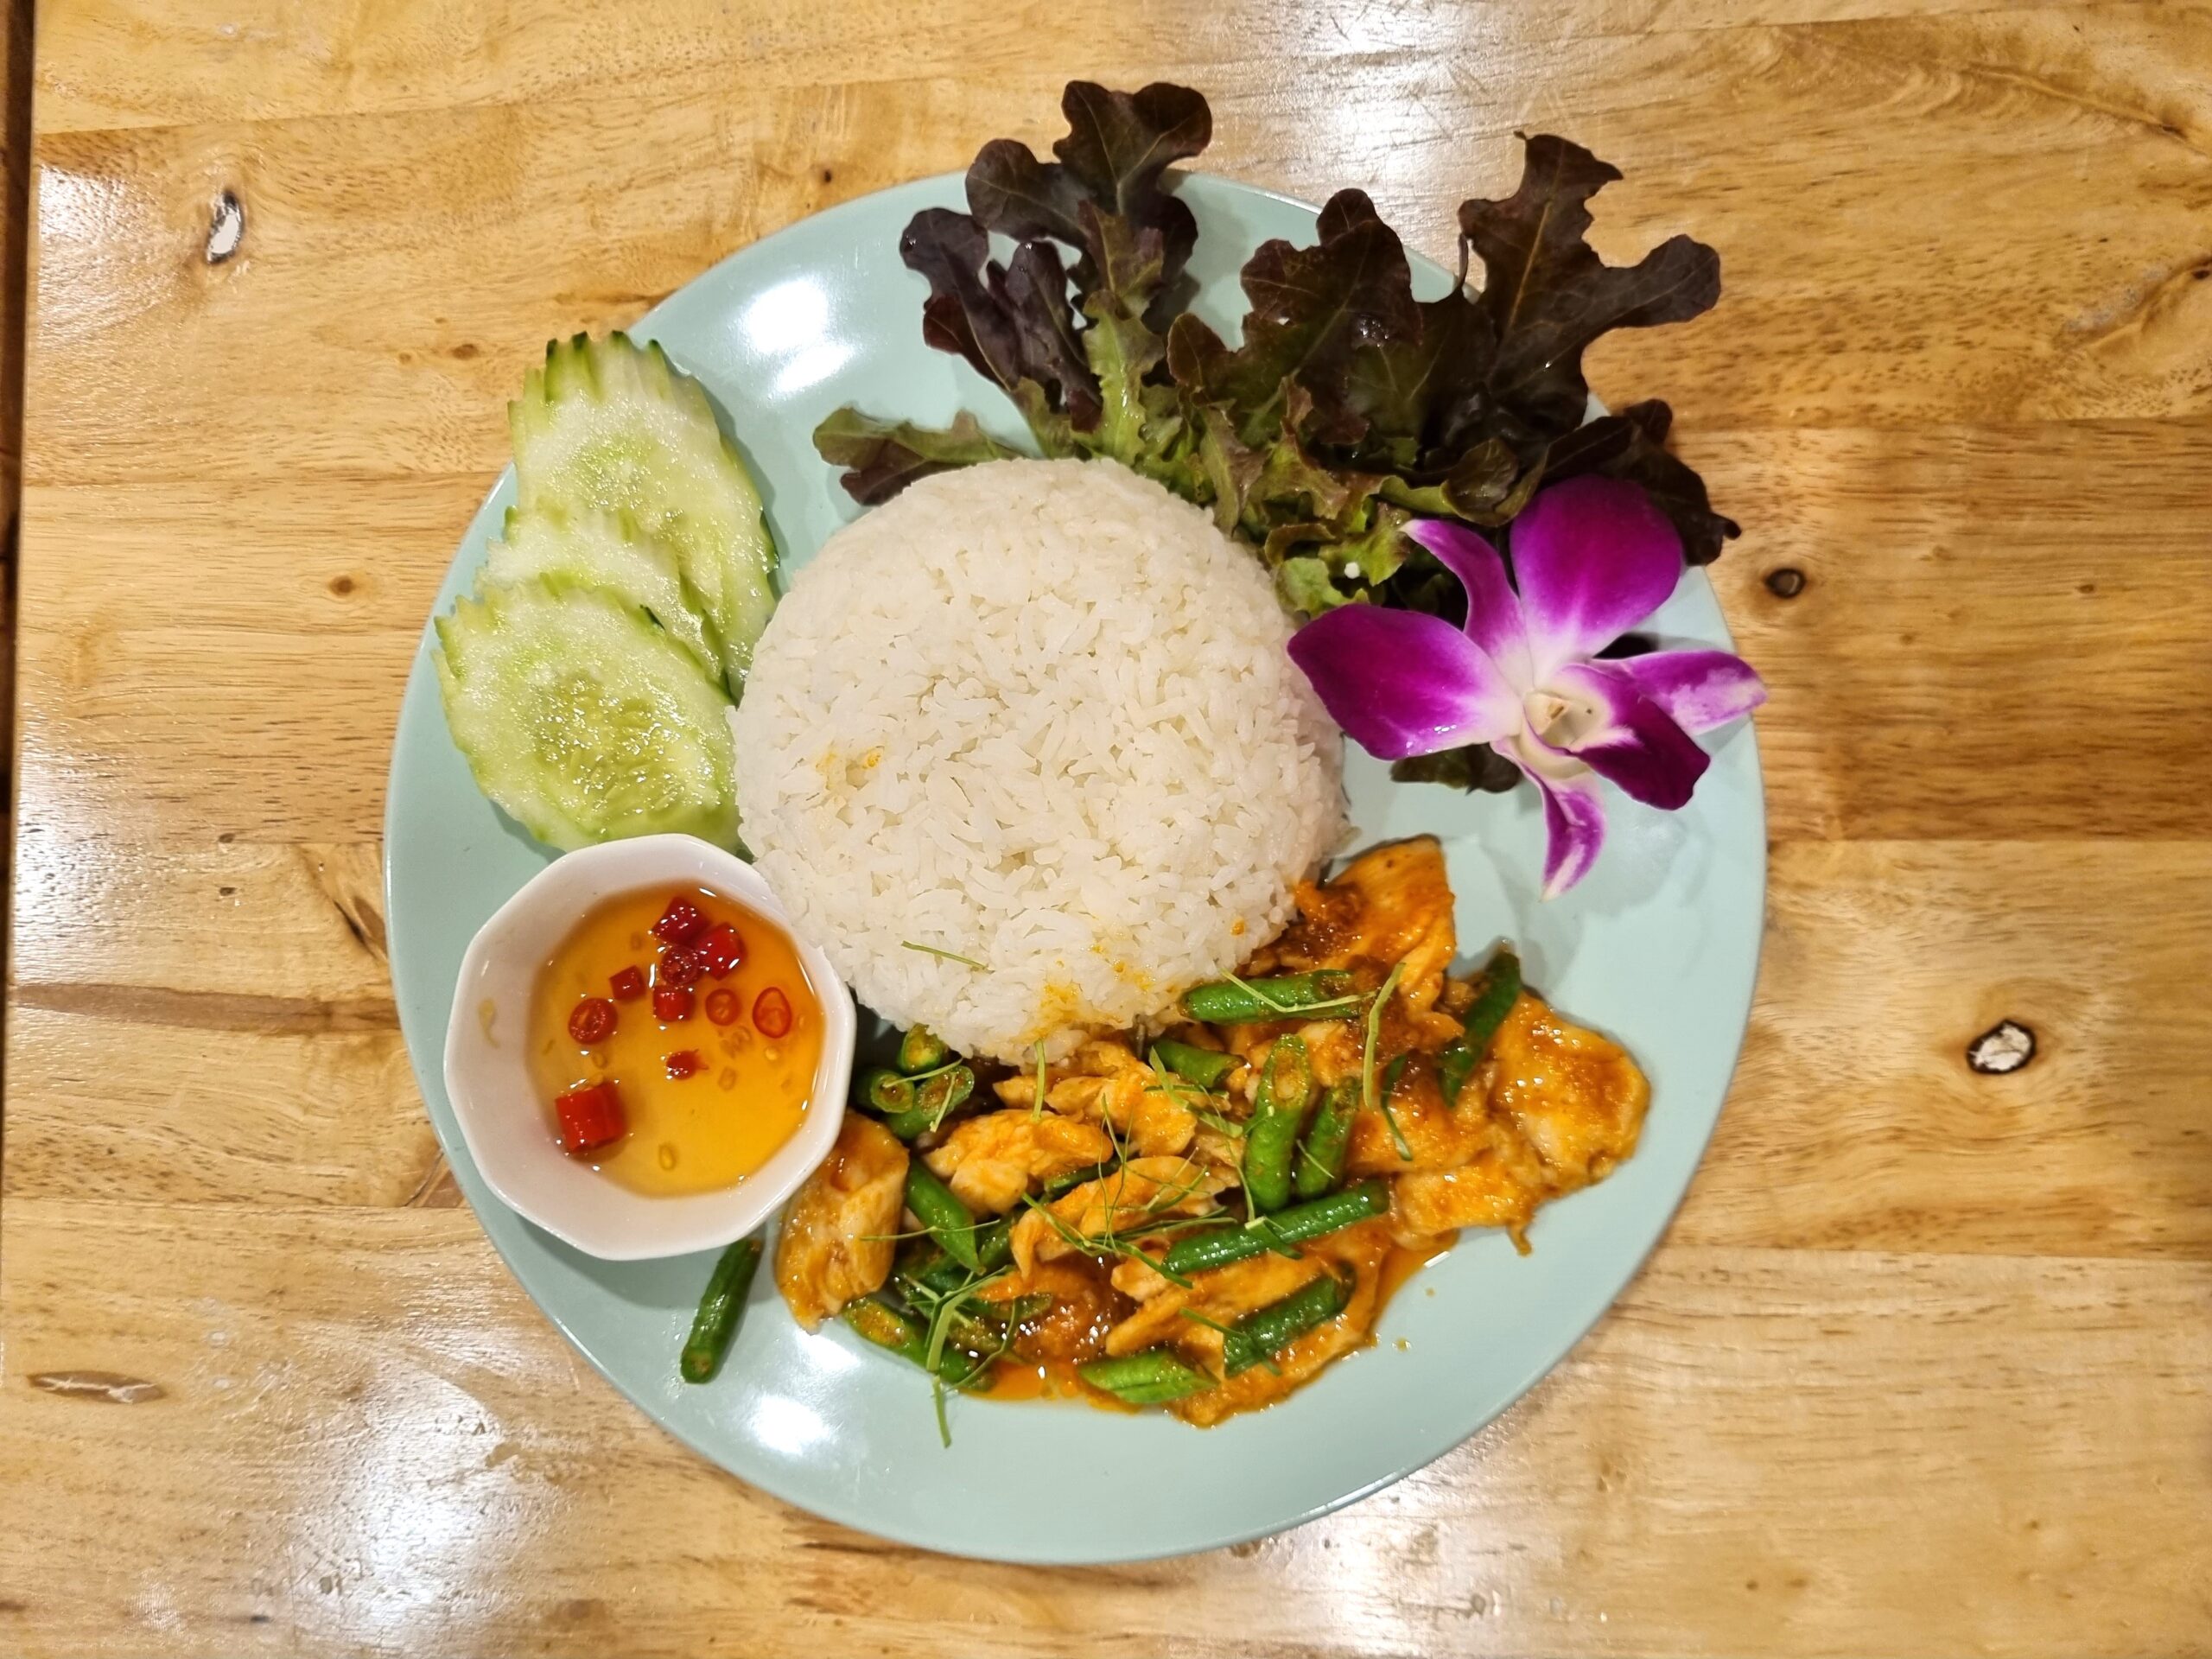 Dare to try some Riski Thai Food?